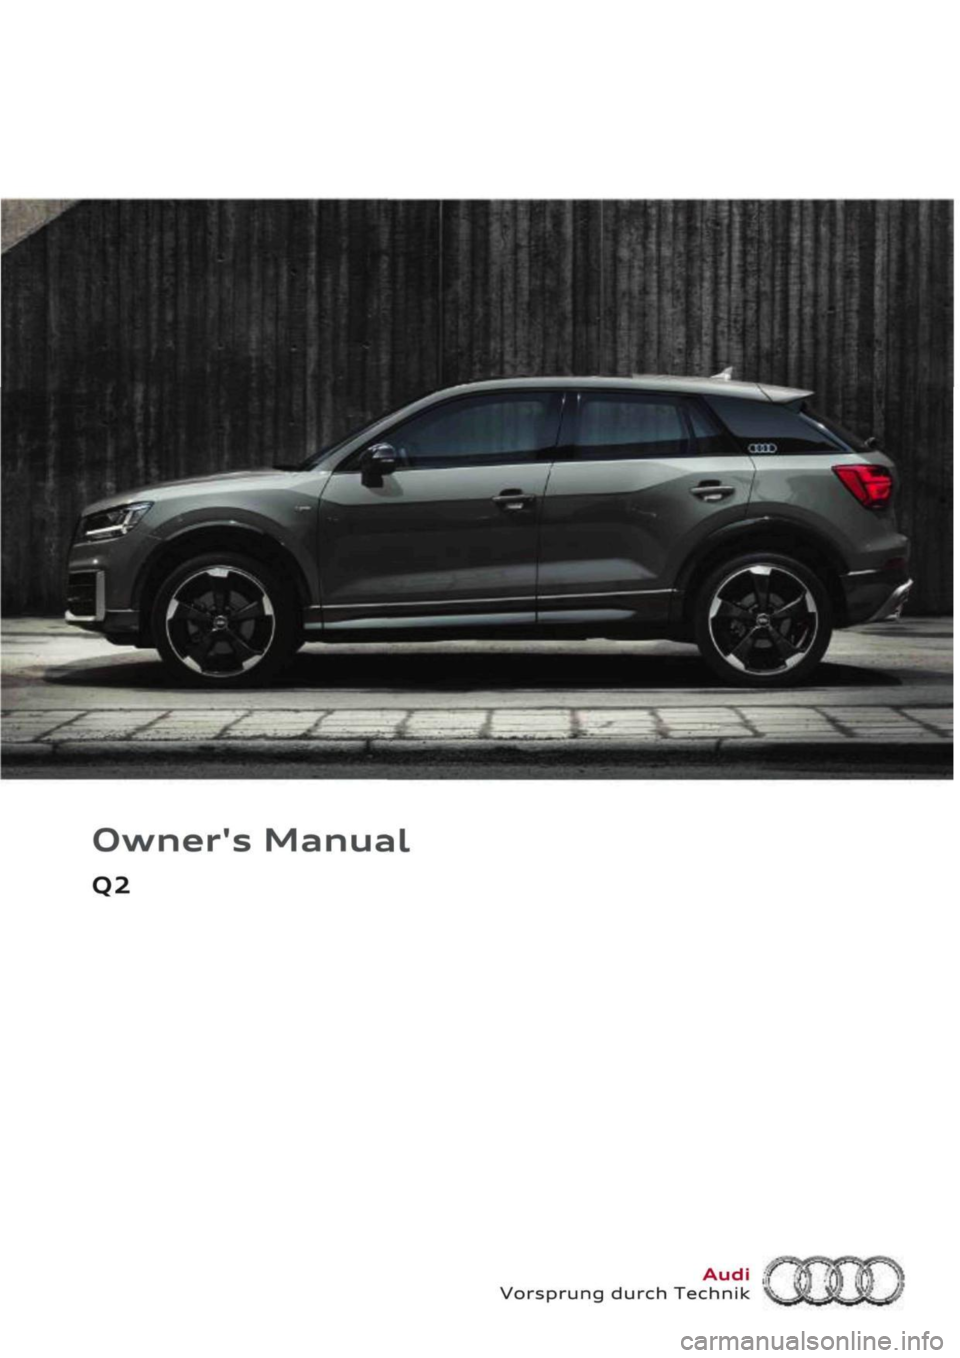 AUDI Q2 2021  Owner´s Manual 
Owners Manual 

Q2 
Audi 
Vorsprung durch Technik  